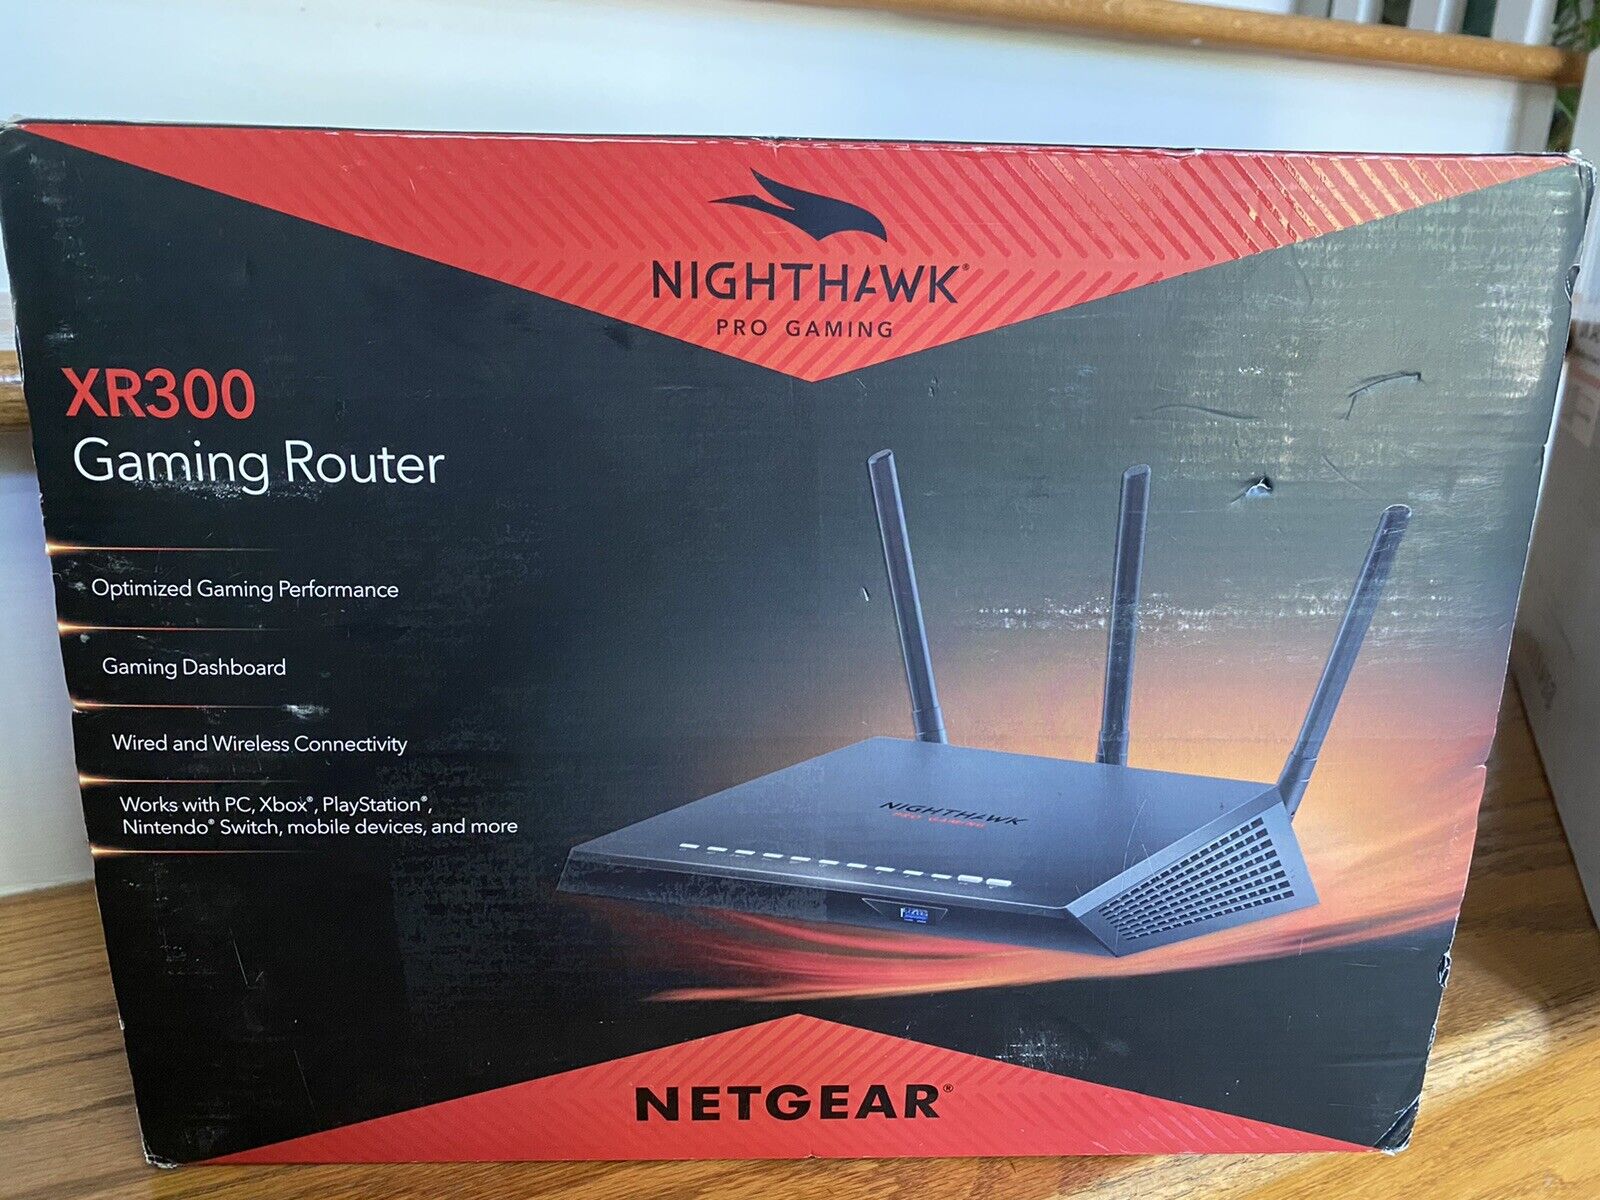 NETGEAR XR300-100NAS Nighthawk Pro Gaming WiFi Router